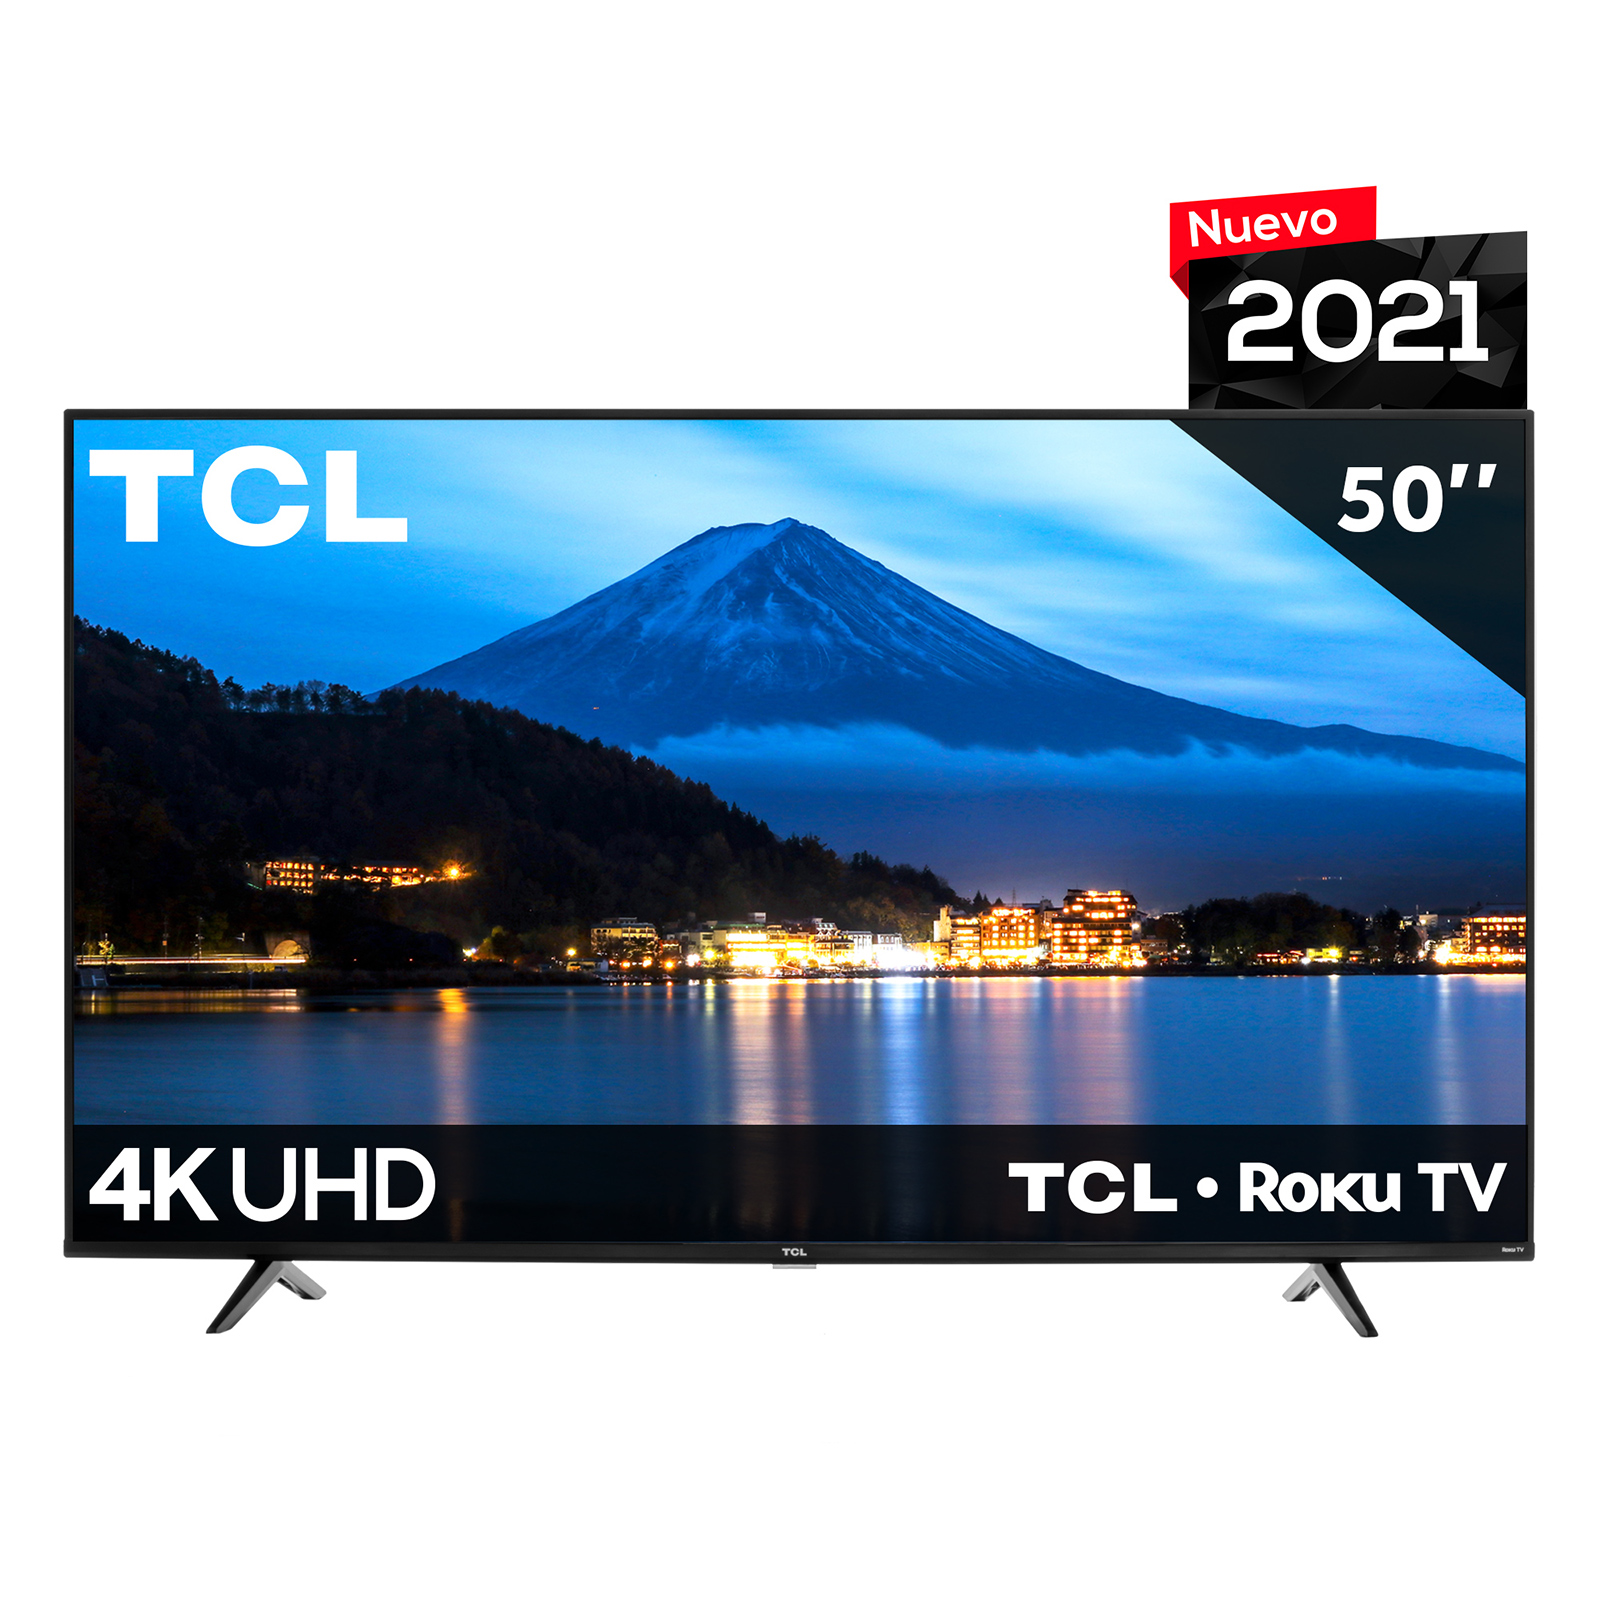 Pantalla TCL 50" Roku Smart TV 4K UHD Wifi Doble Banda 50S443-MX